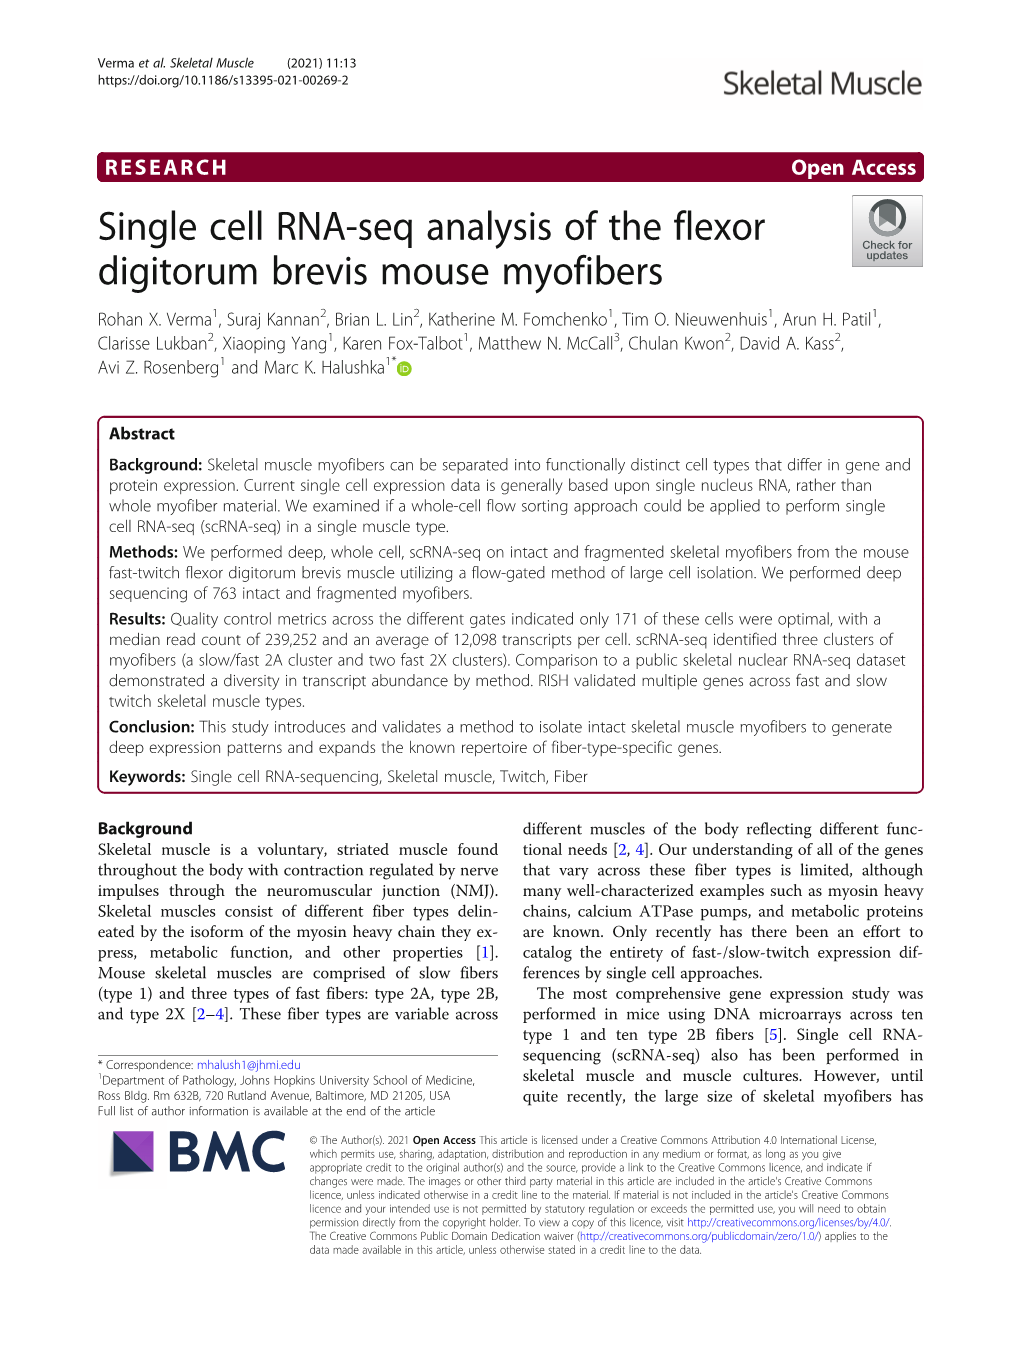 Single Cell RNA-Seq Analysis of the Flexor Digitorum Brevis Mouse Myofibers Rohan X